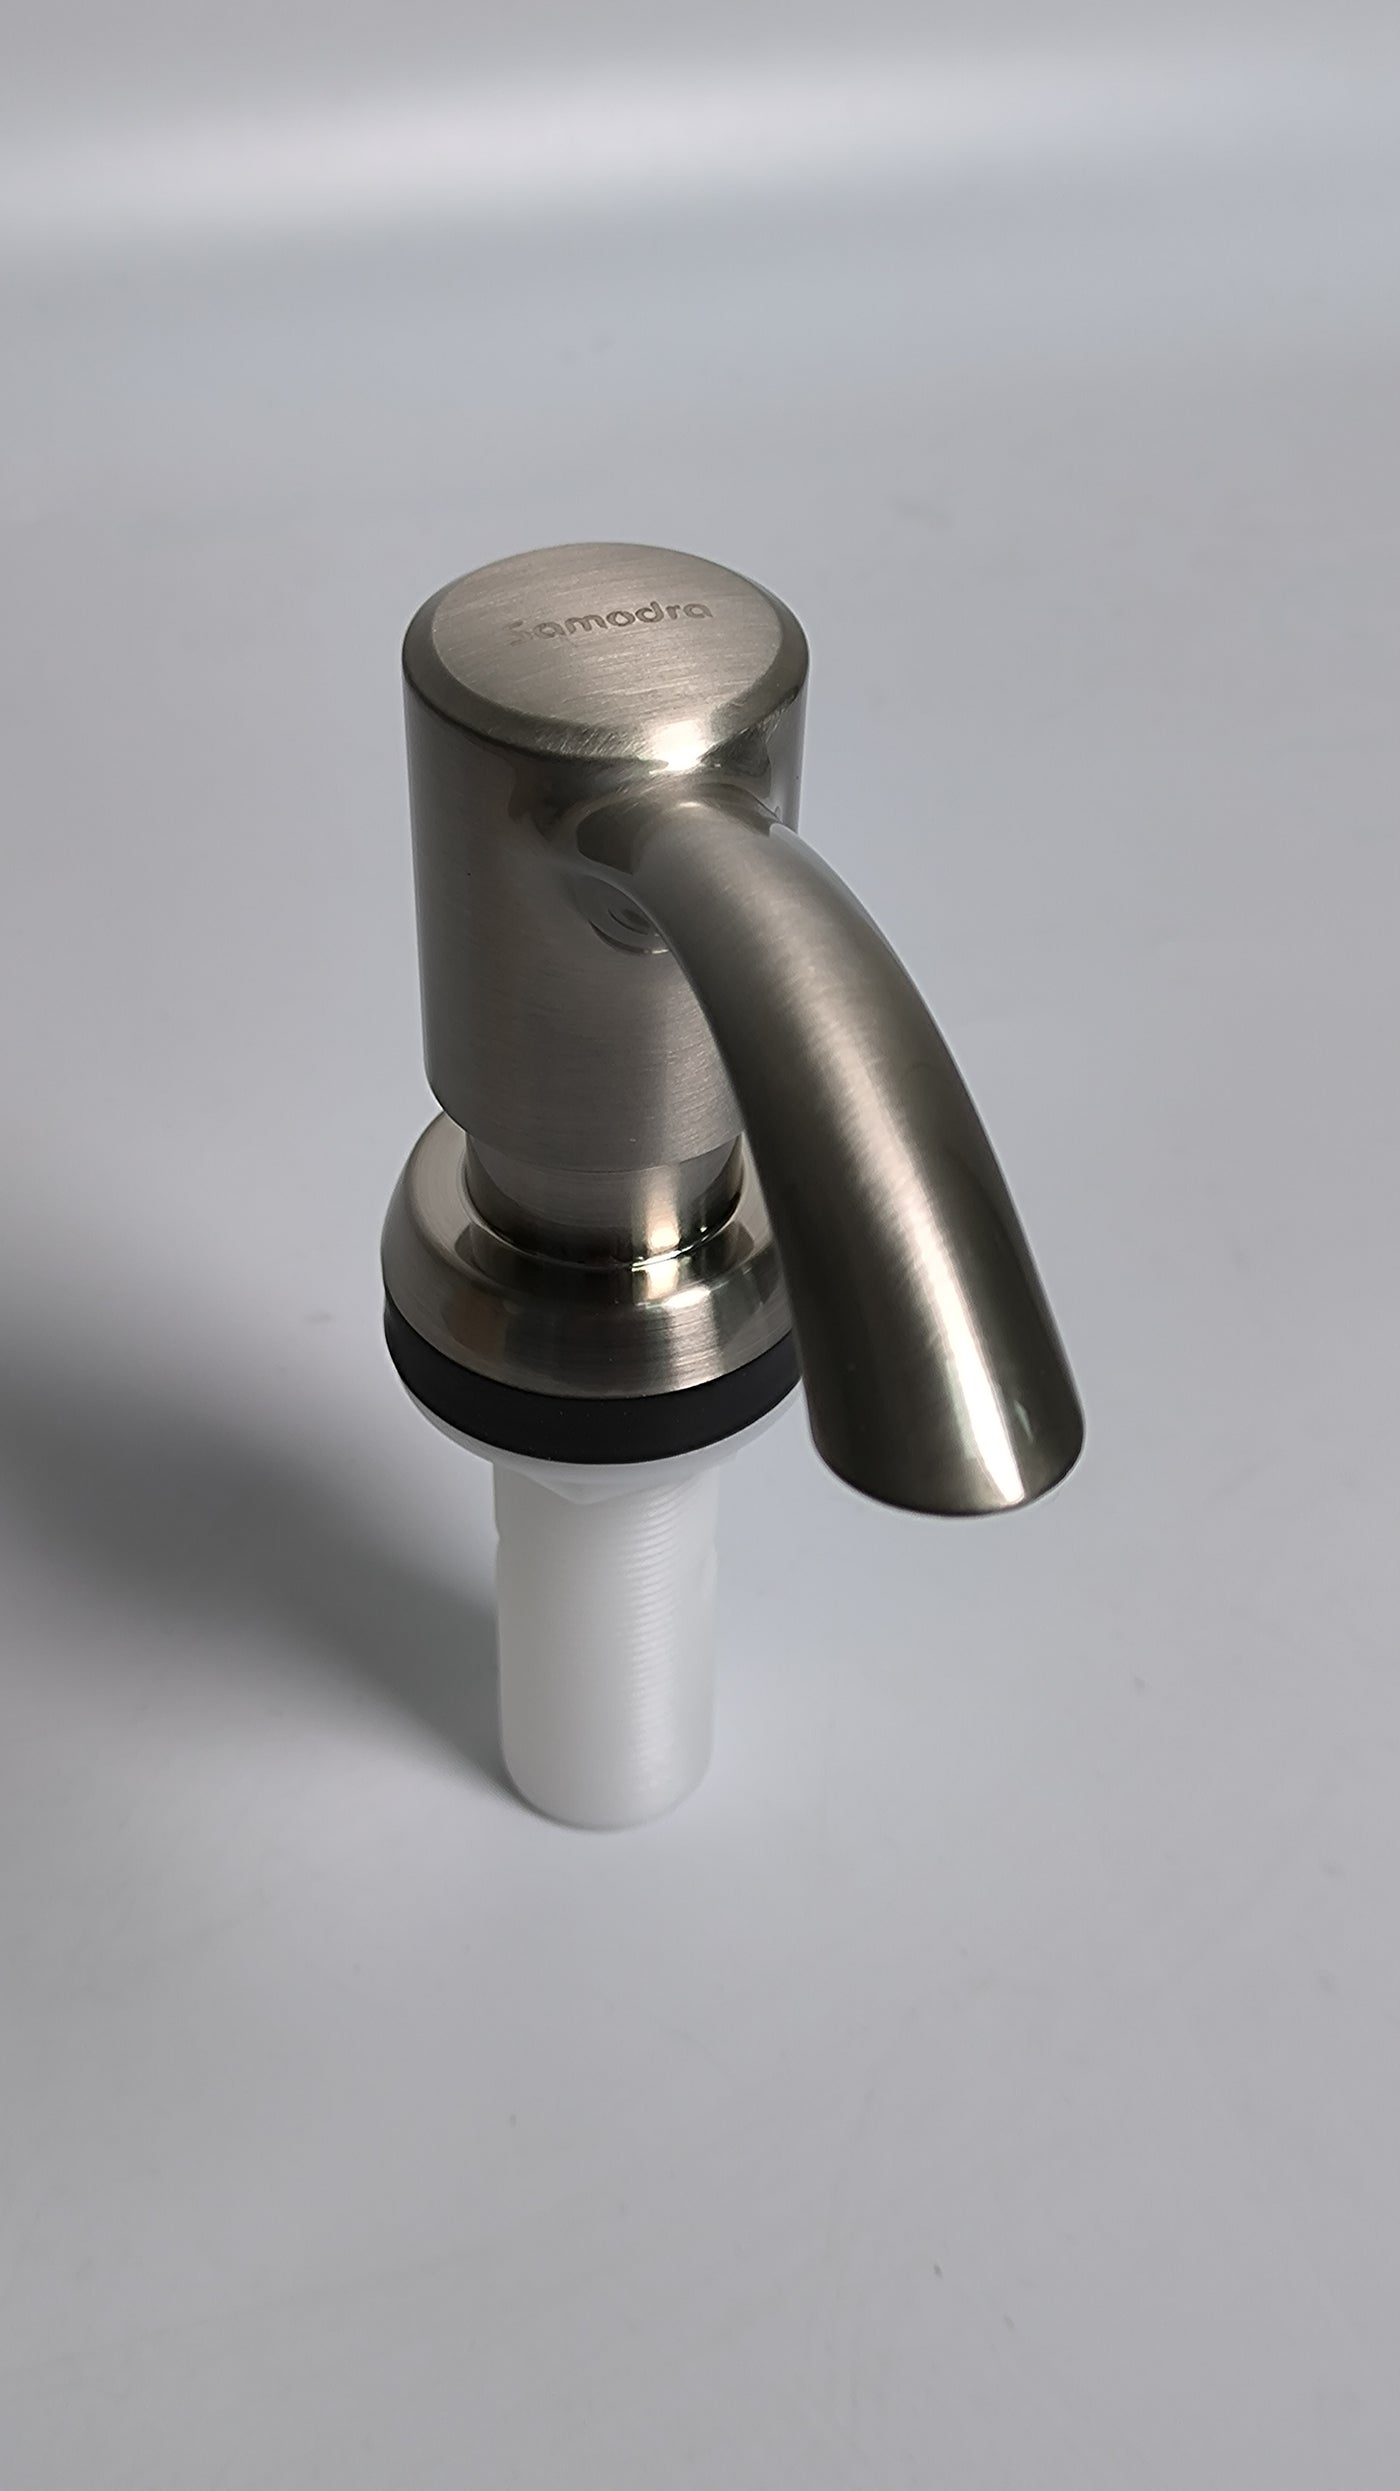 Samodra Soap Dispenser for Kitchen Sink Counter Dispenser 17 OZ Bottle Built in Refill from The Top (Brushed Nickel)